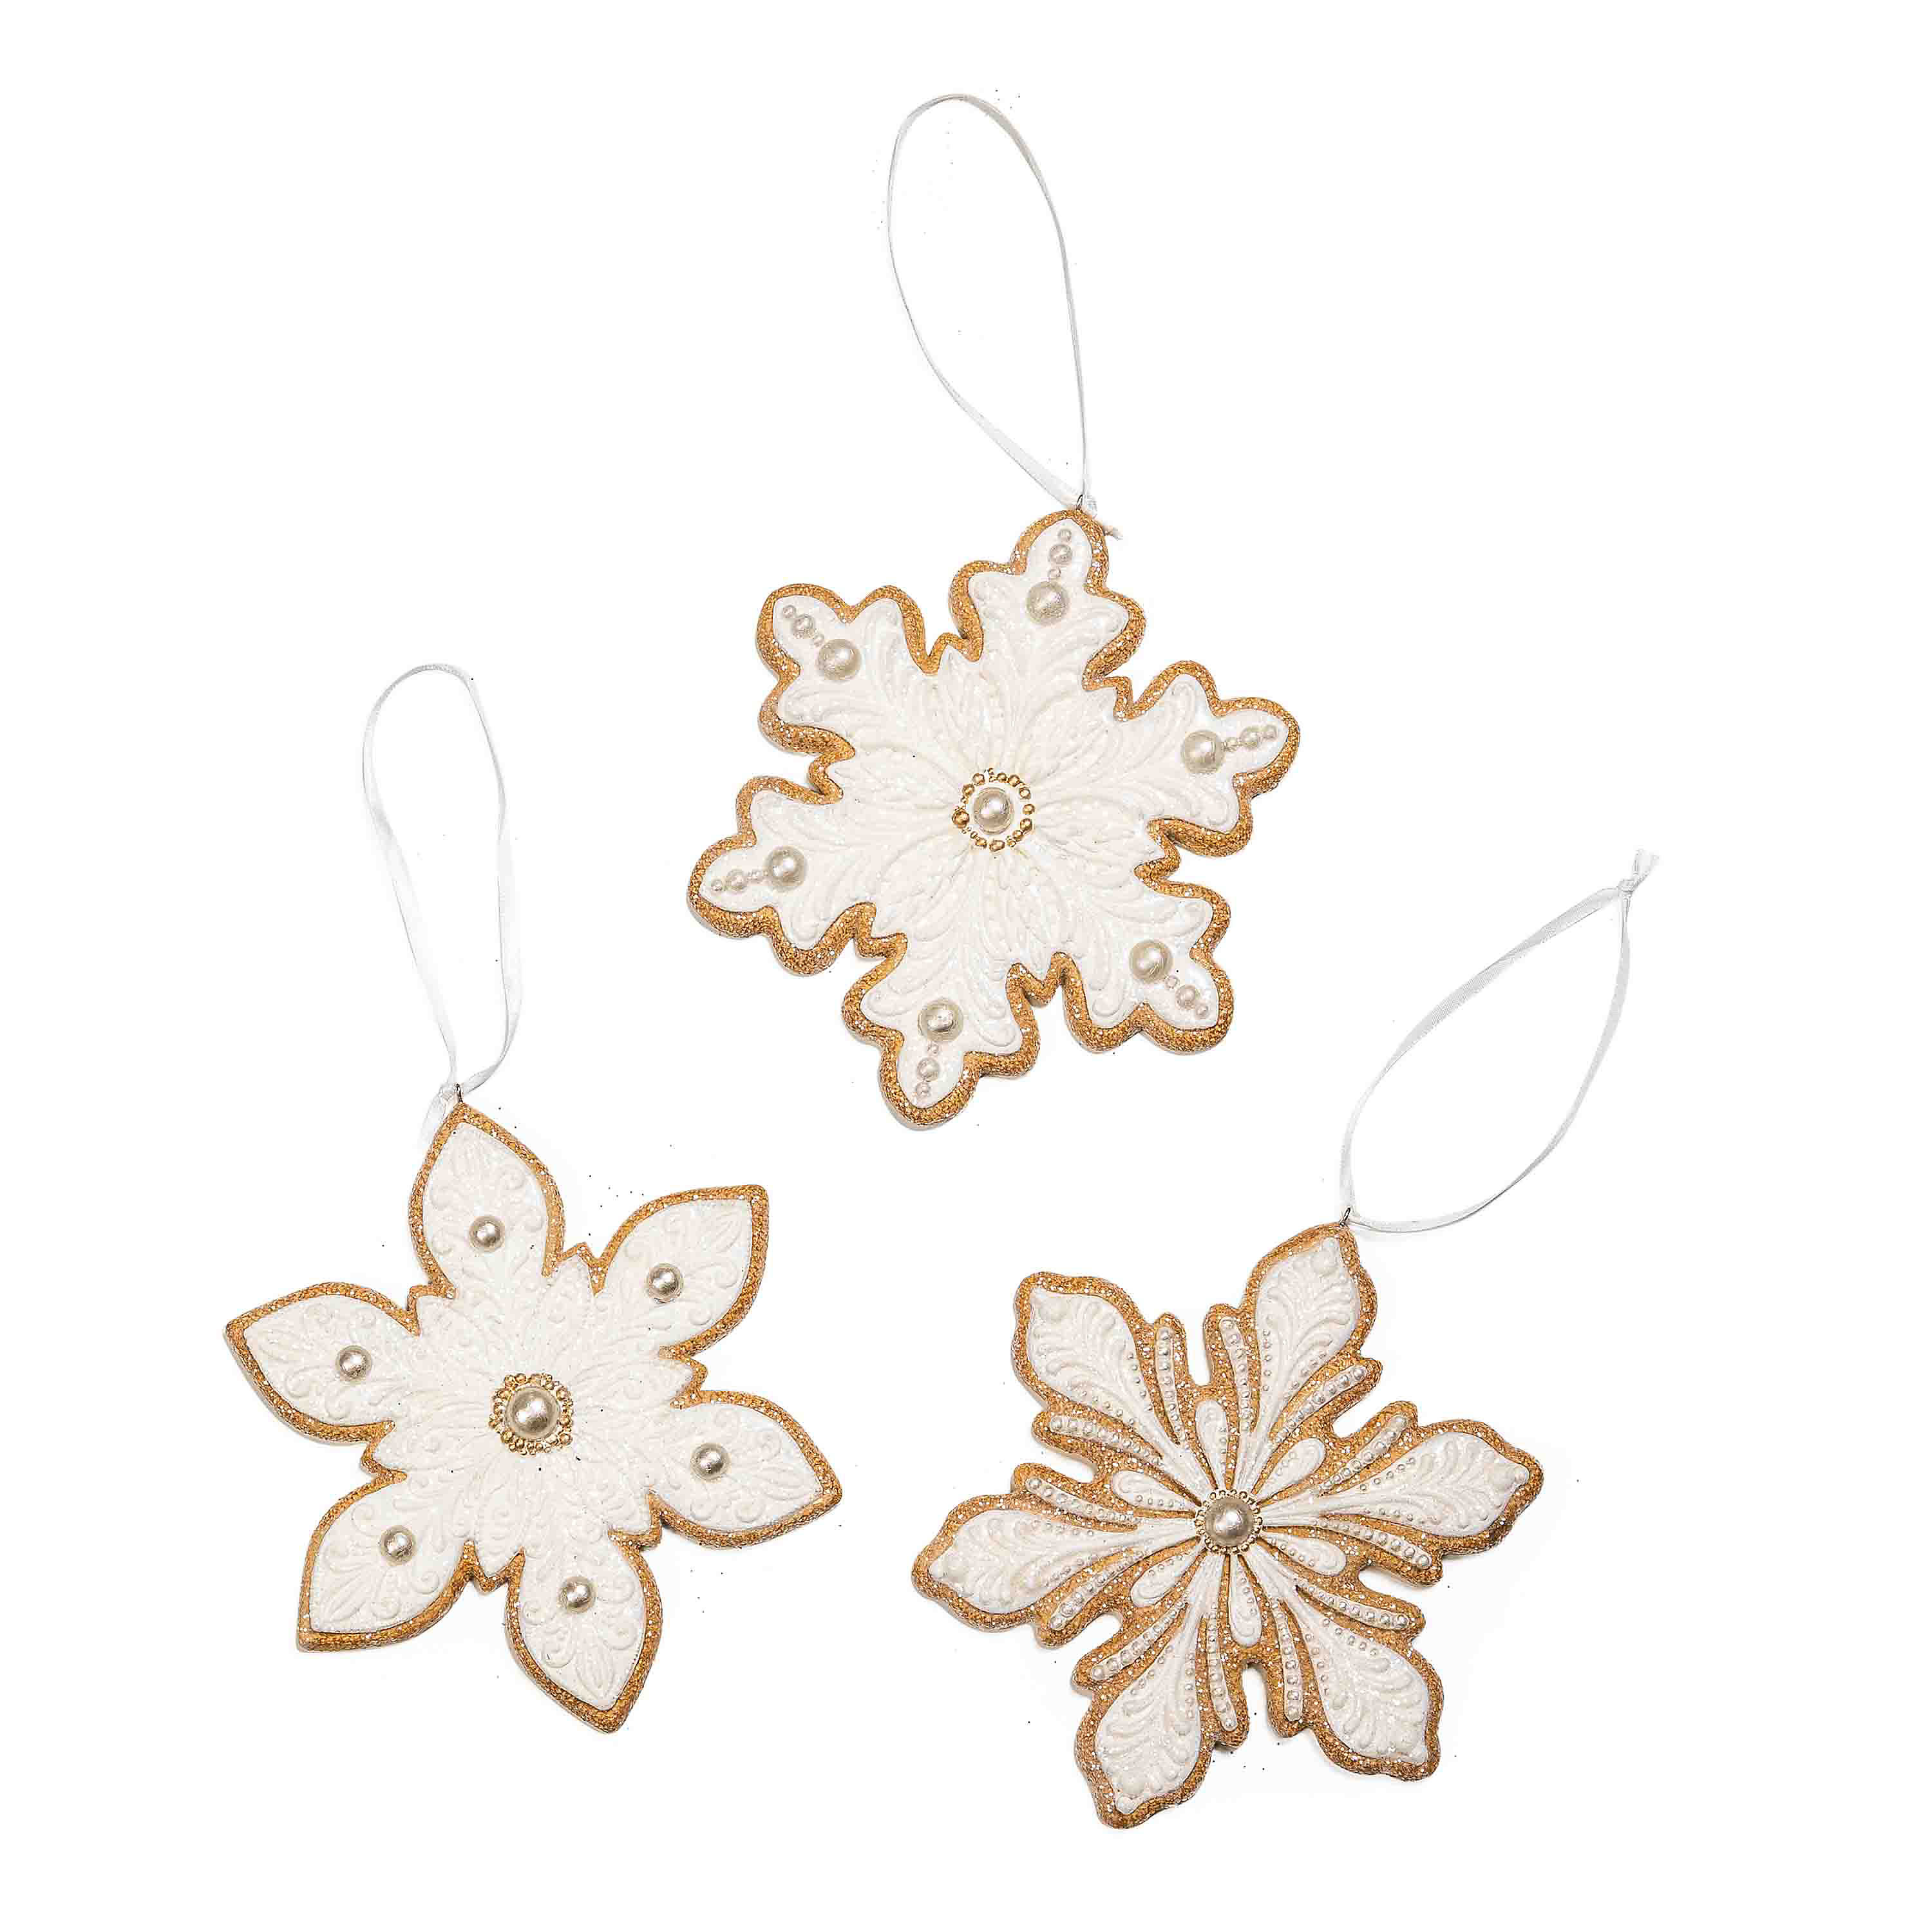 Gingerbread Snowflake Ornaments, Set of 3 mackenzie-childs Panama 0